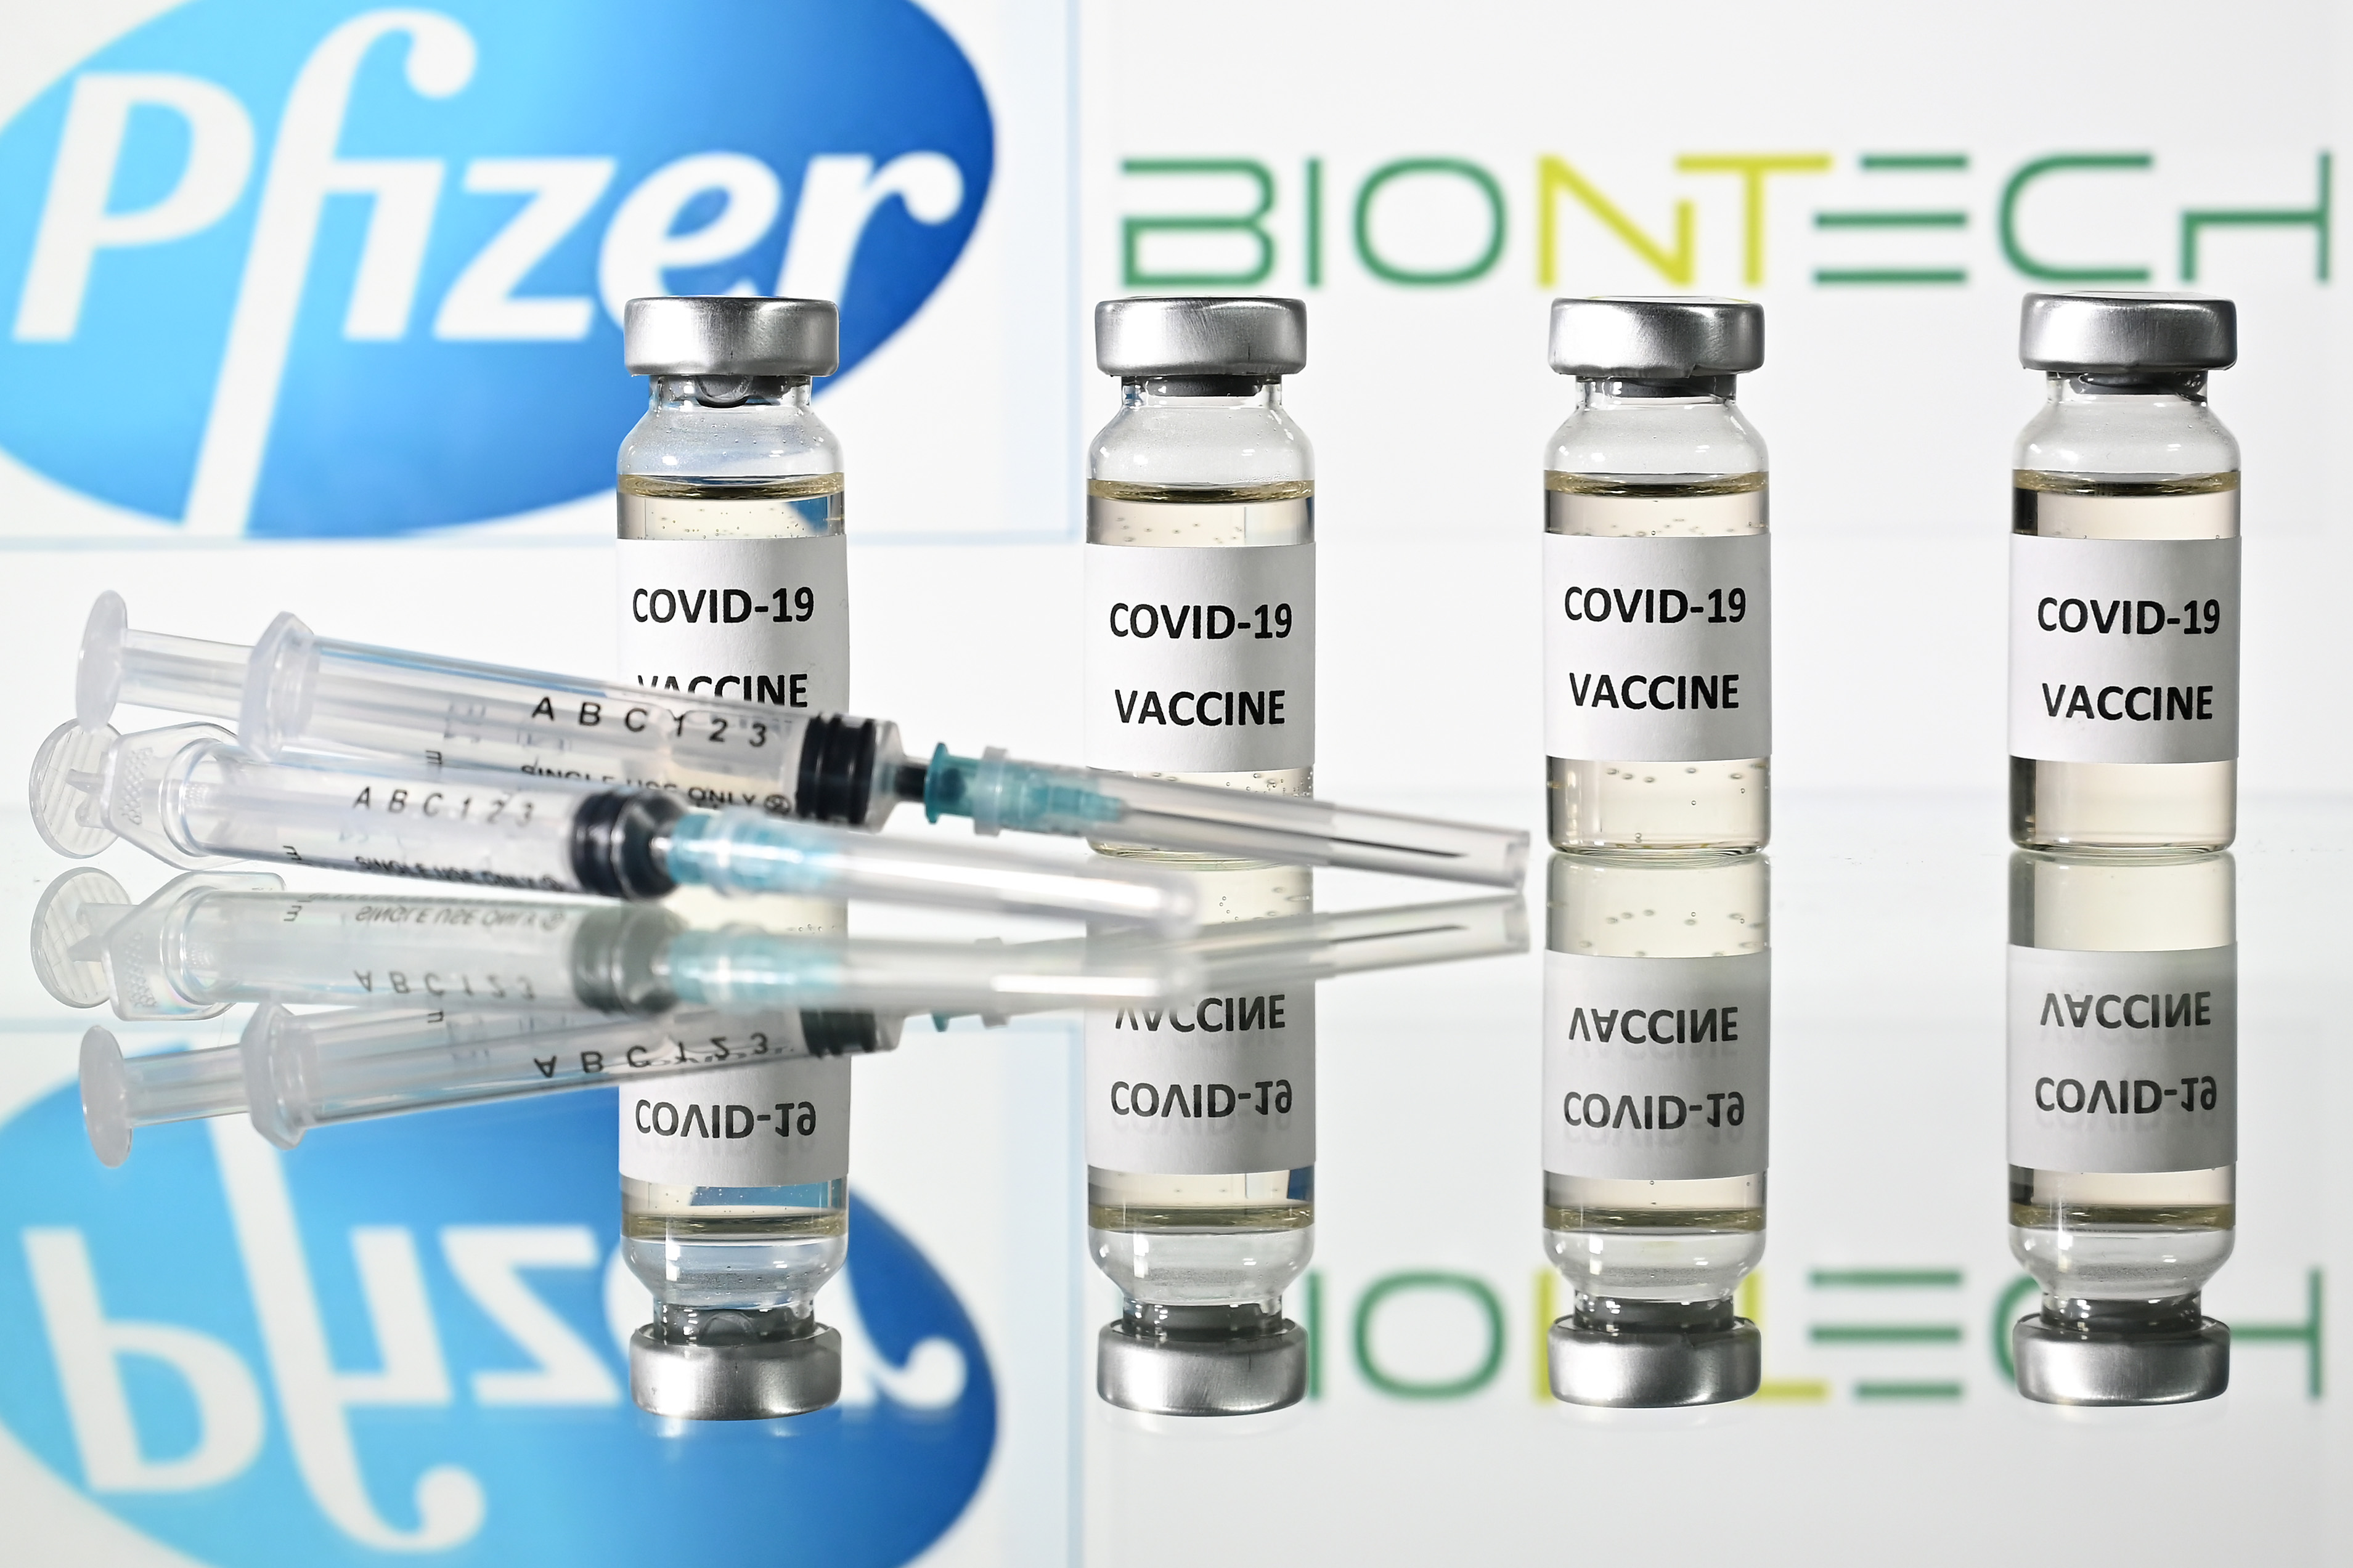 FDA fully approves Pfizer-BioNTech's COVID-19 vaccine | TechCrunch